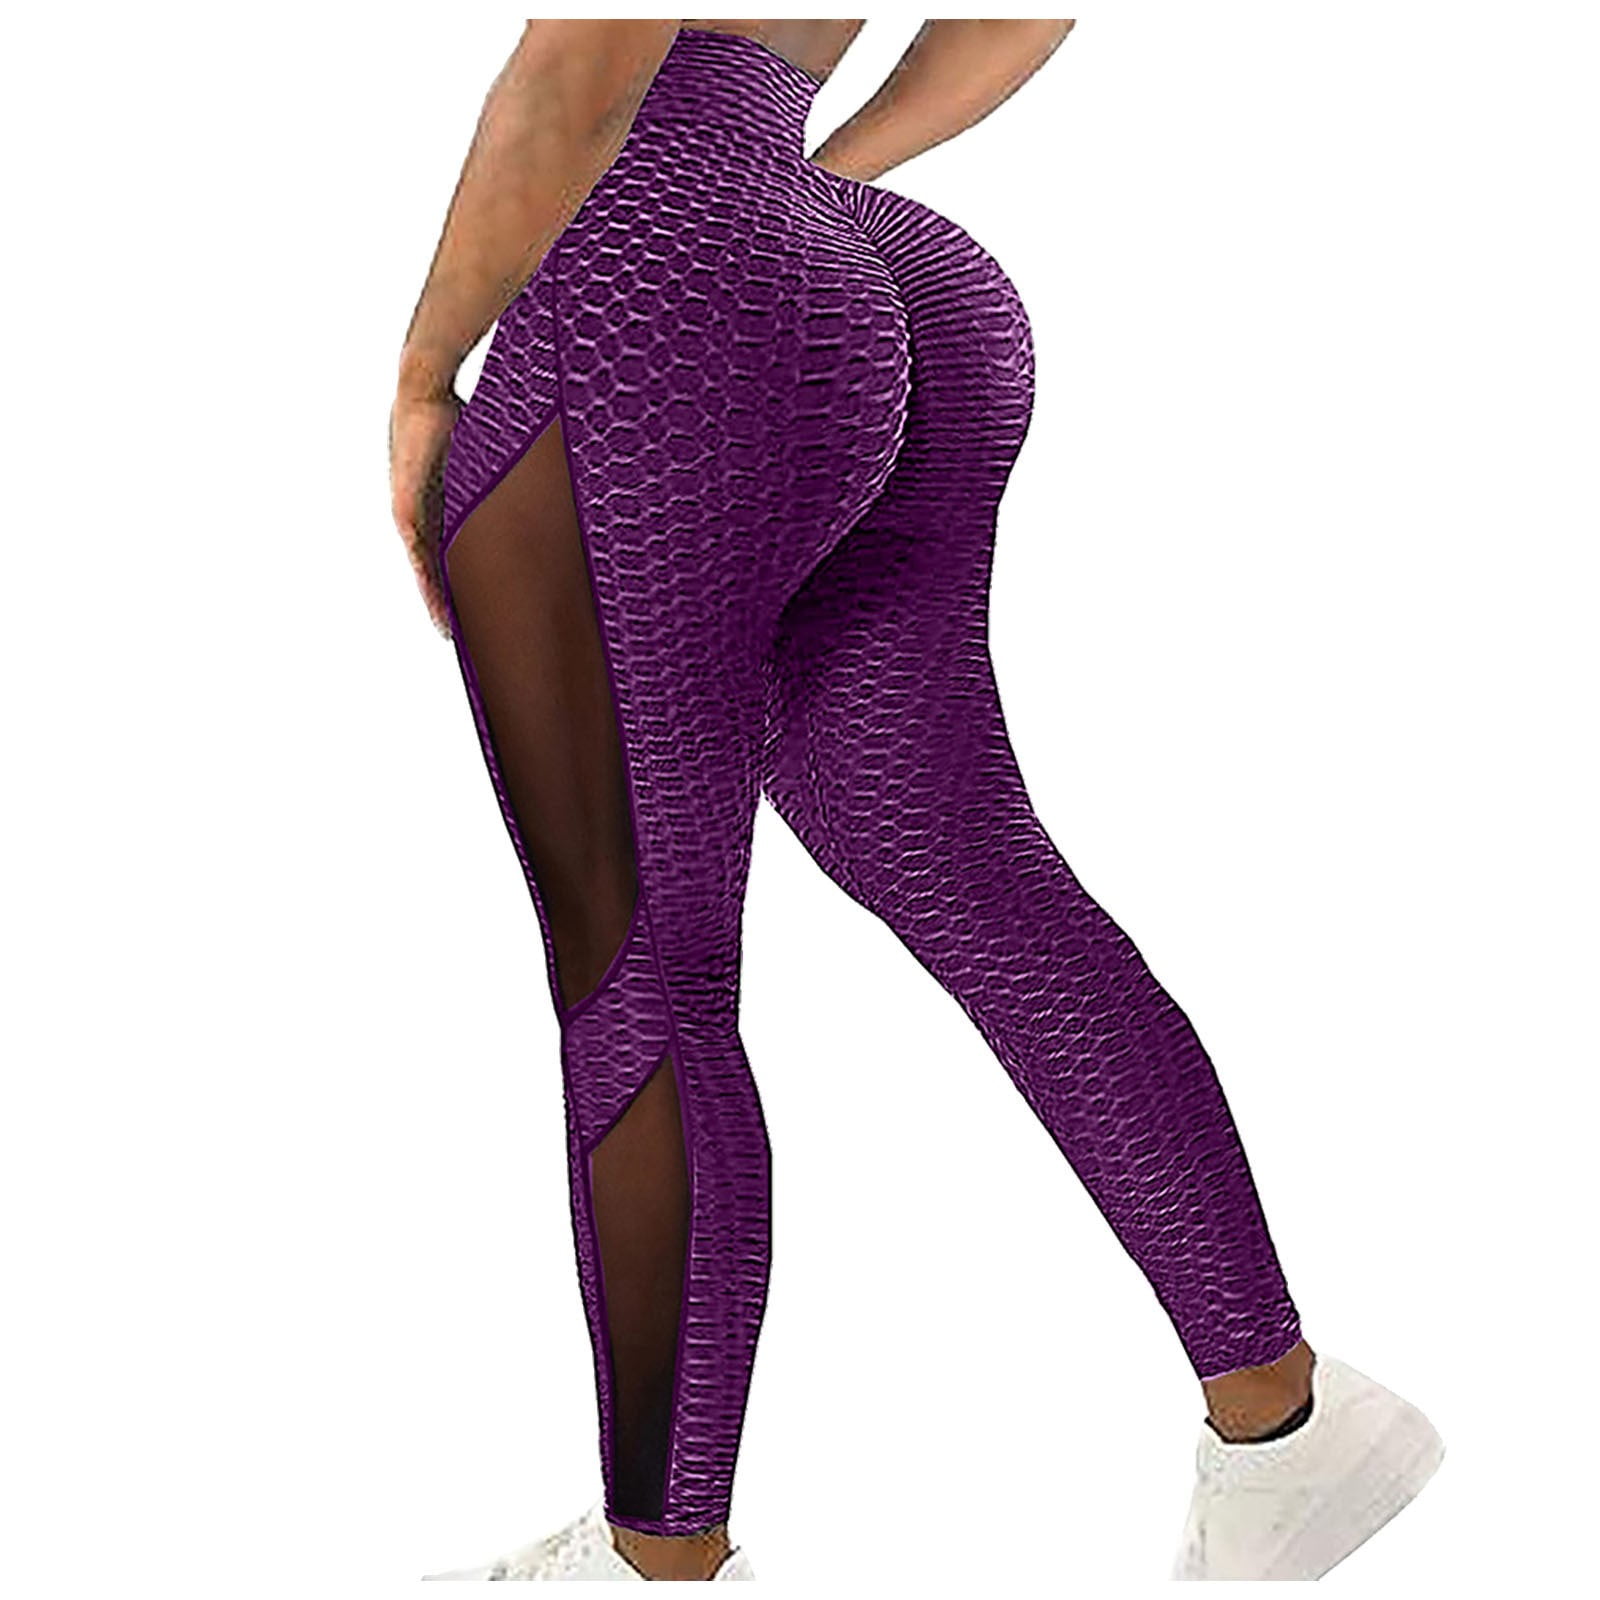 NWT $95 Avocado Serenity Shred Shredded Purple Yoga Leggings Size